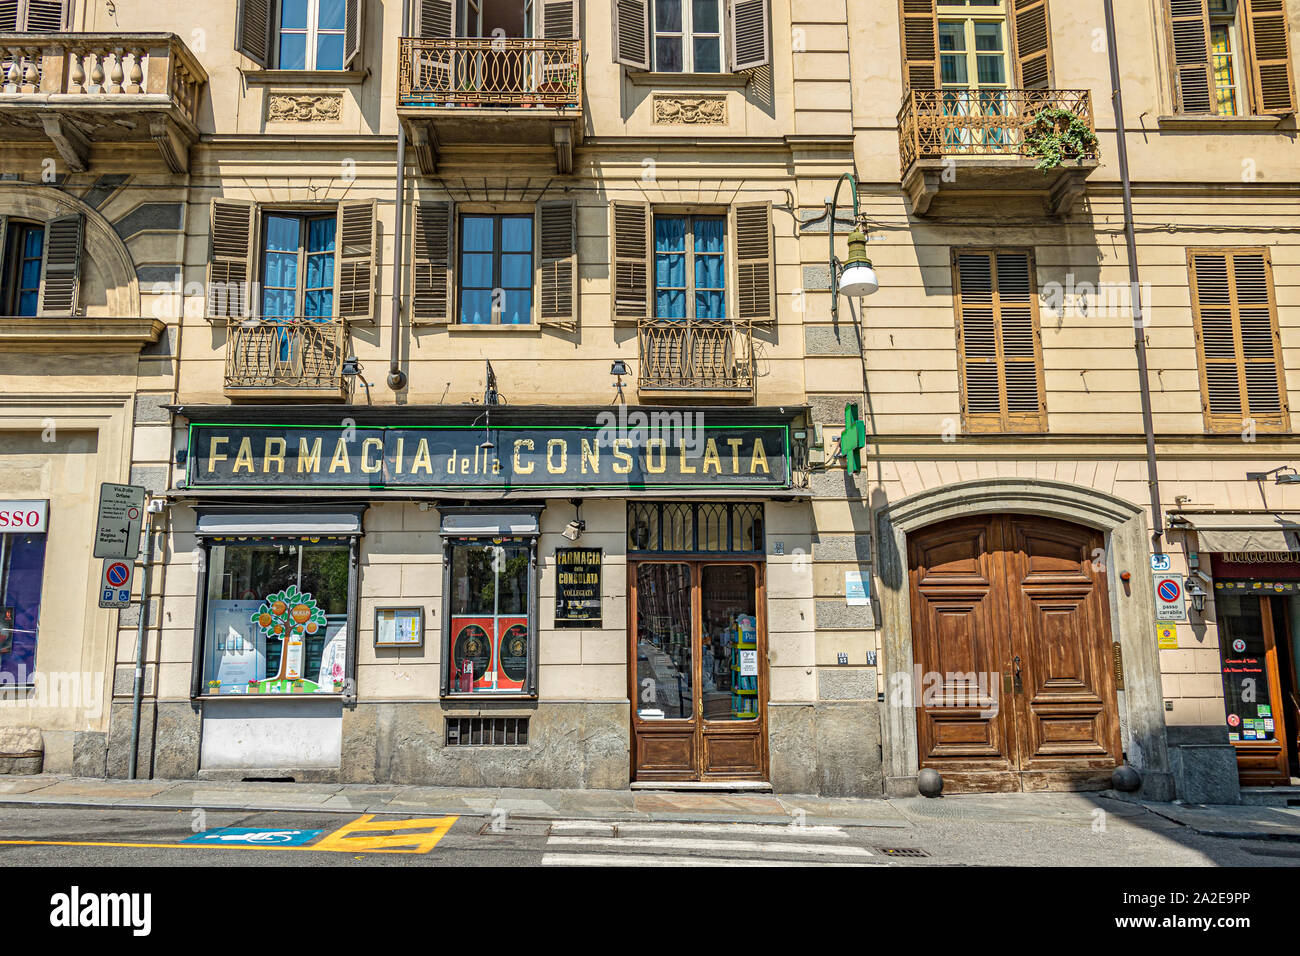 Farmacia della Consolata an Italian pharmacy on Via delle Orfanen ,Turin,Italy Stock Photo